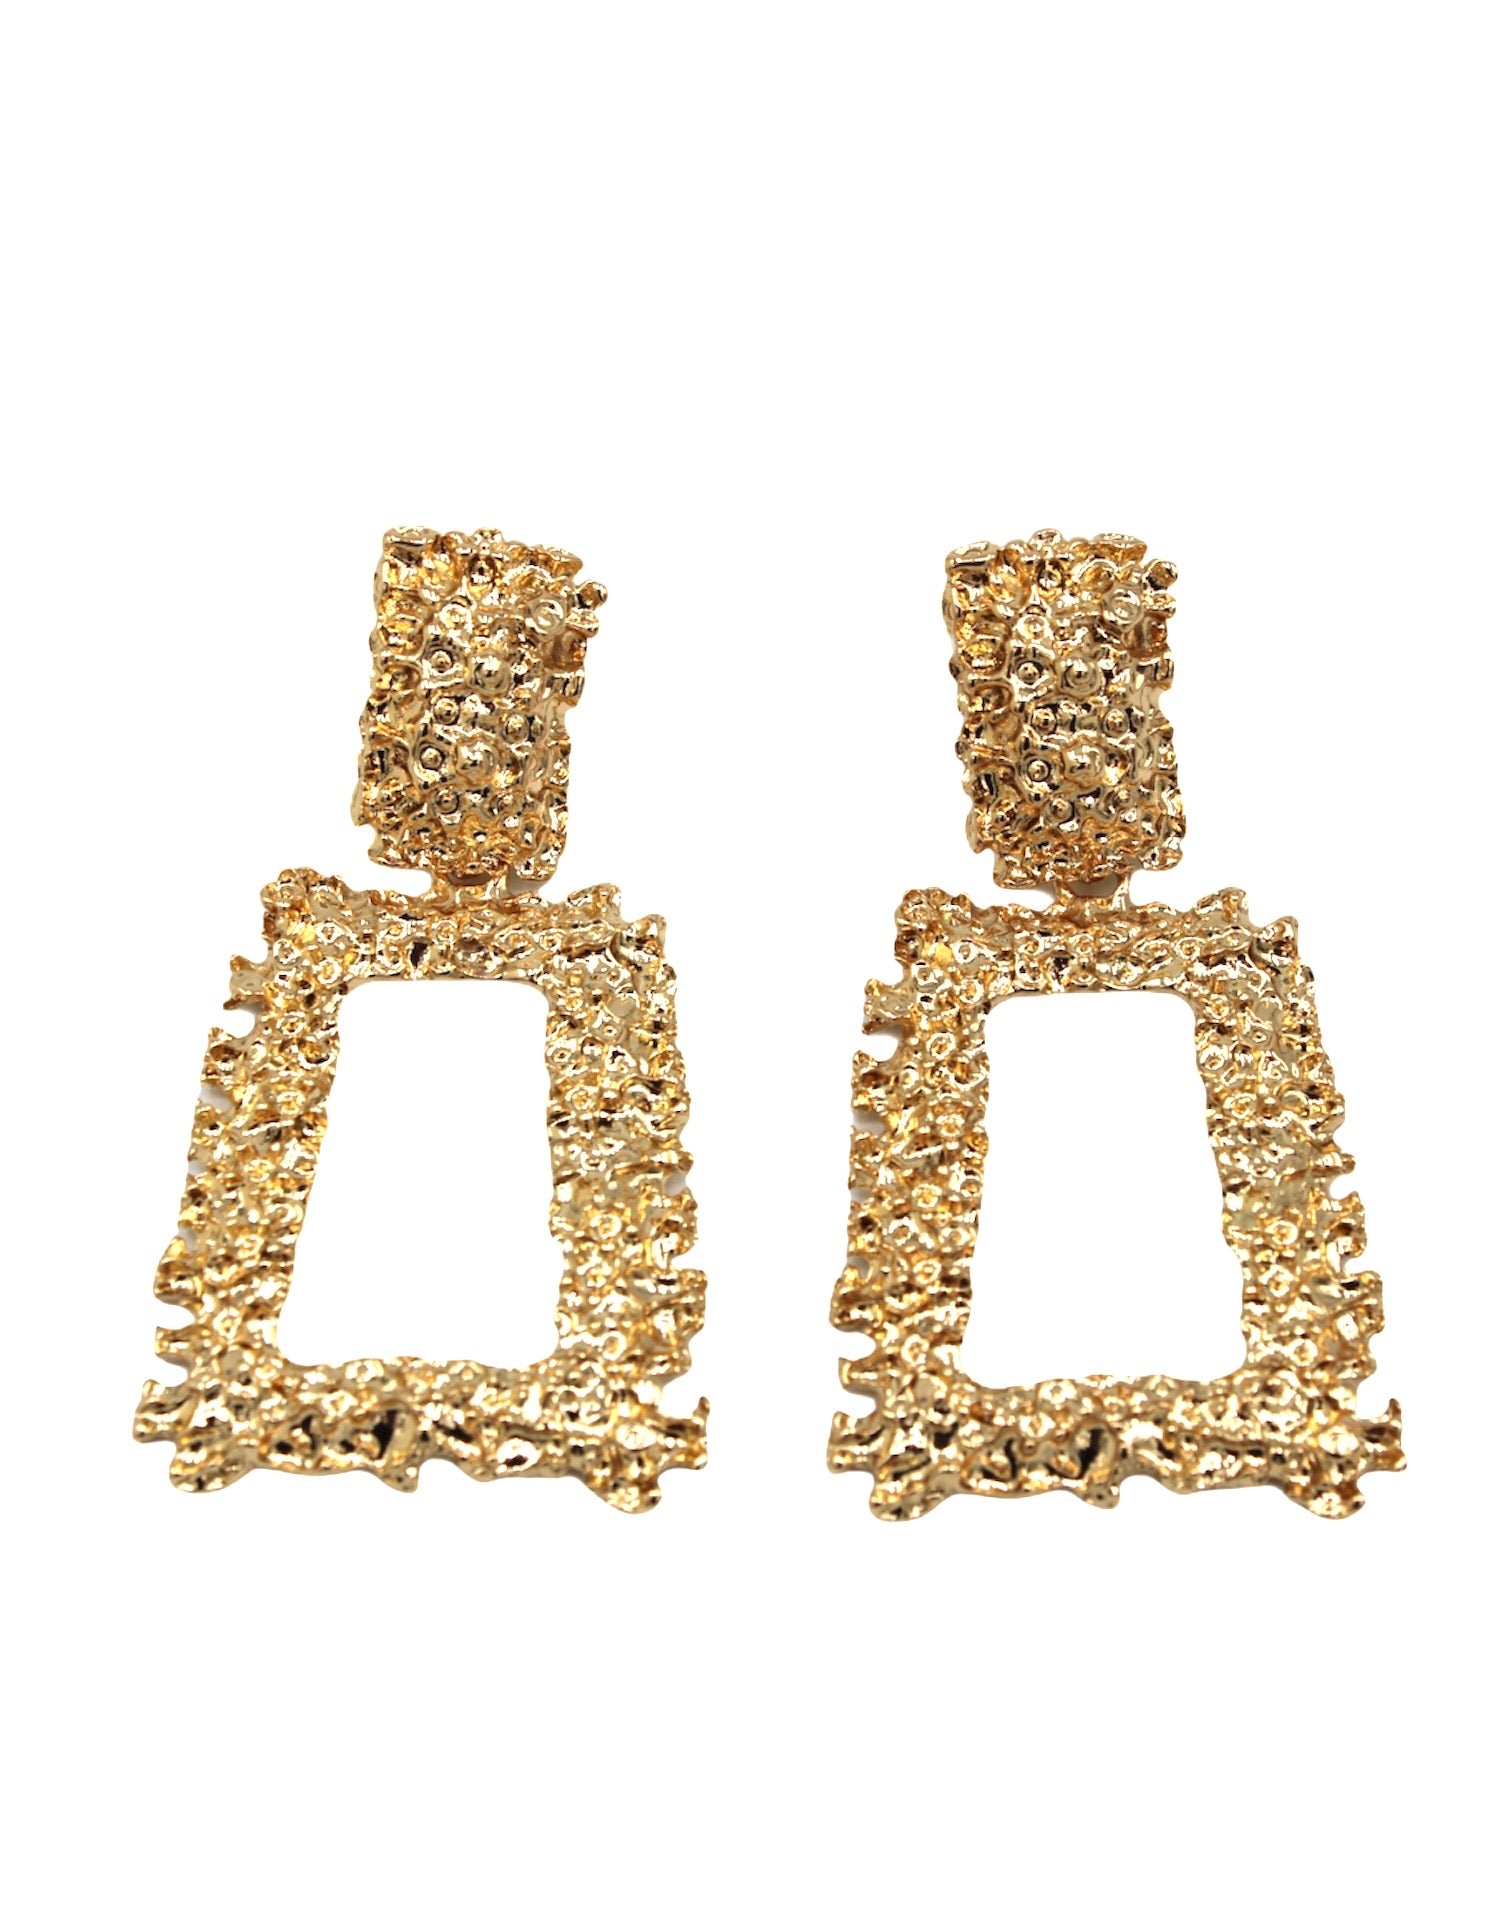 Cleo earrings - Monique Fashion Accessories